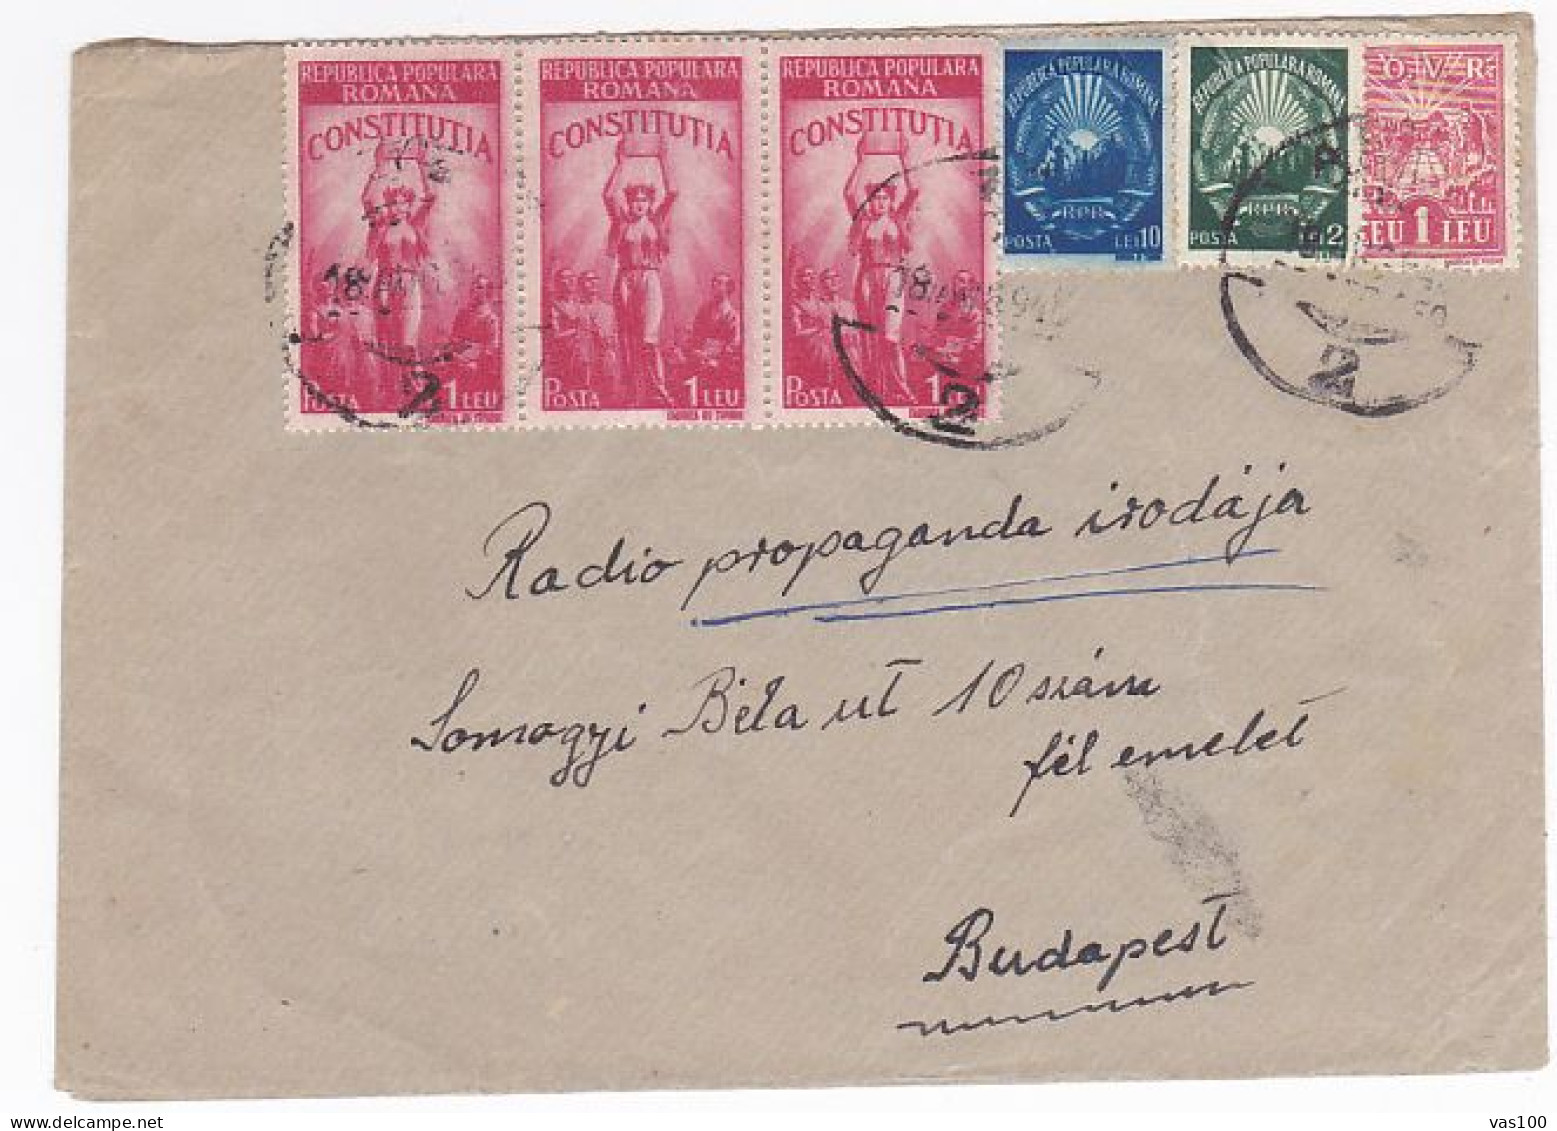 REVENUE STAMP, CONSTITUTION, REPUBLIC COAT OF ARMS, STAMPS ON COVER, 1948, ROMANIA - Steuermarken